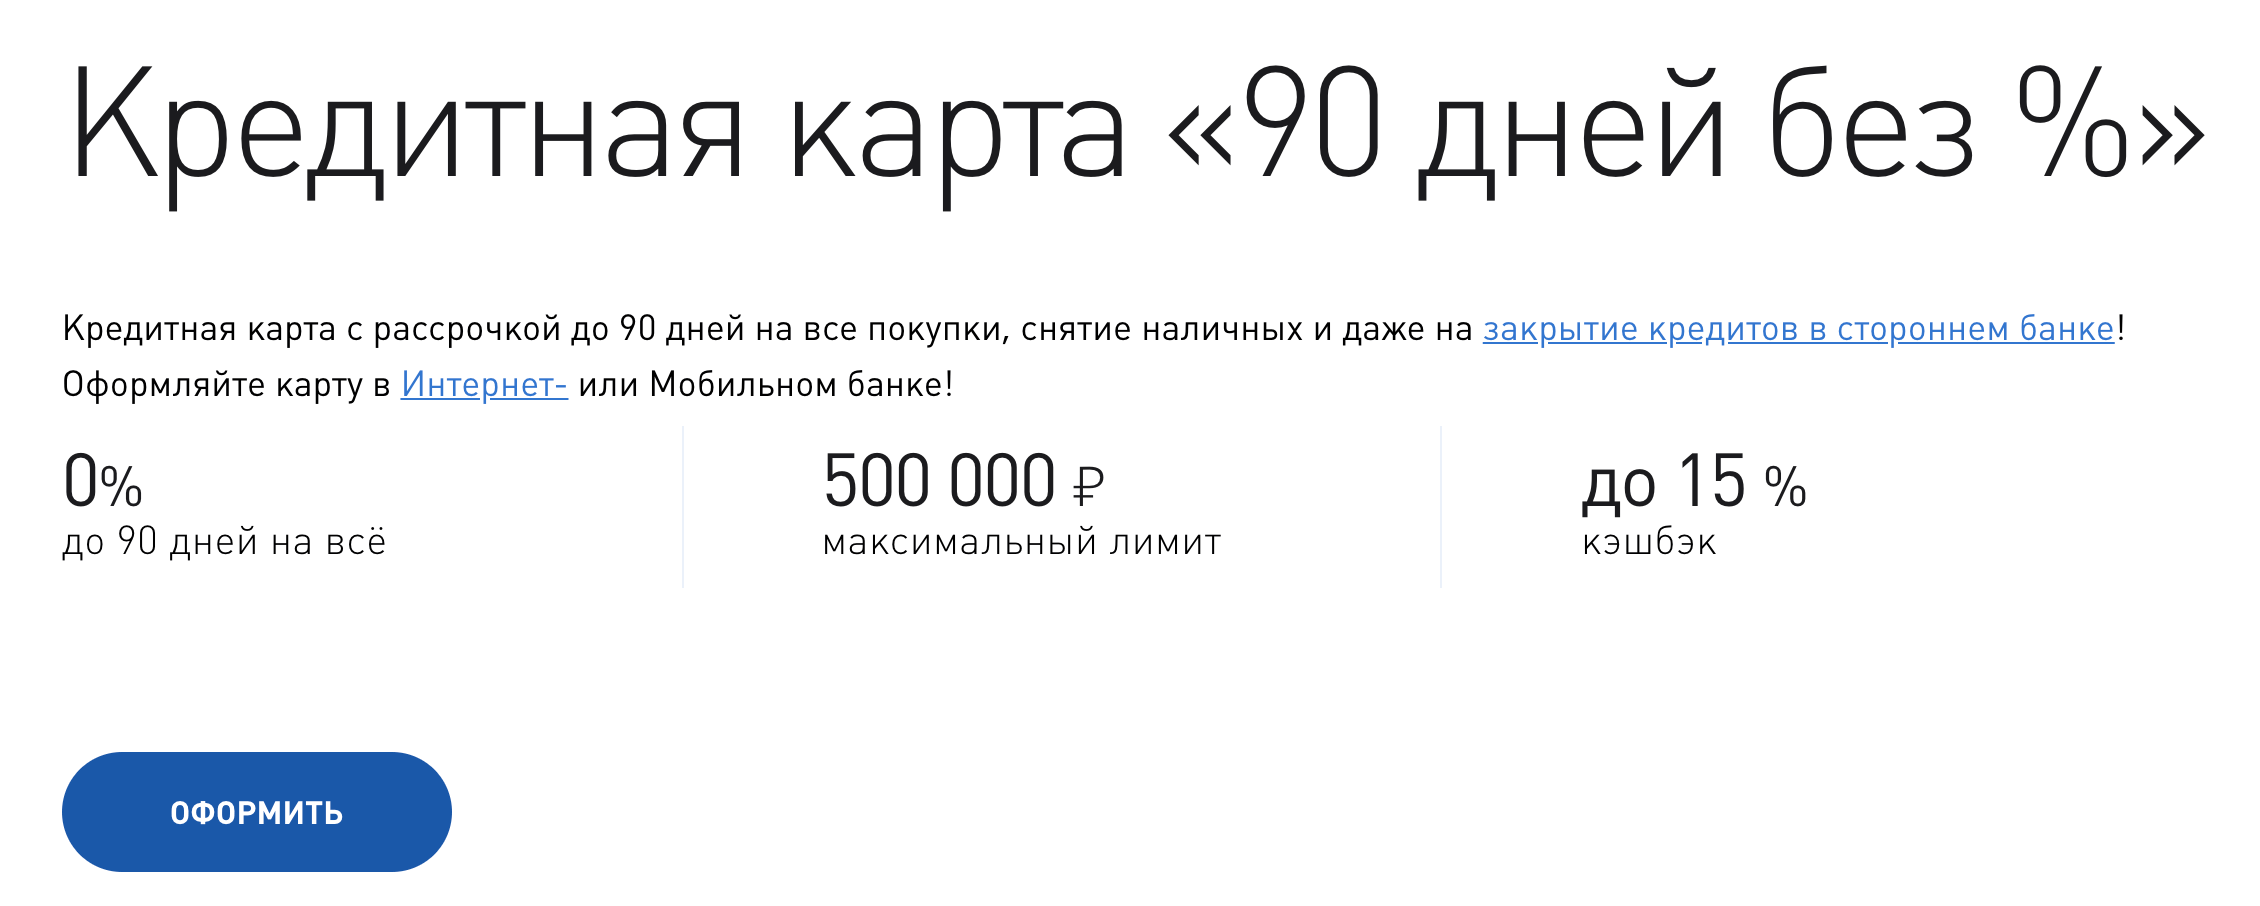 Кредитная карта "90 дней без %"